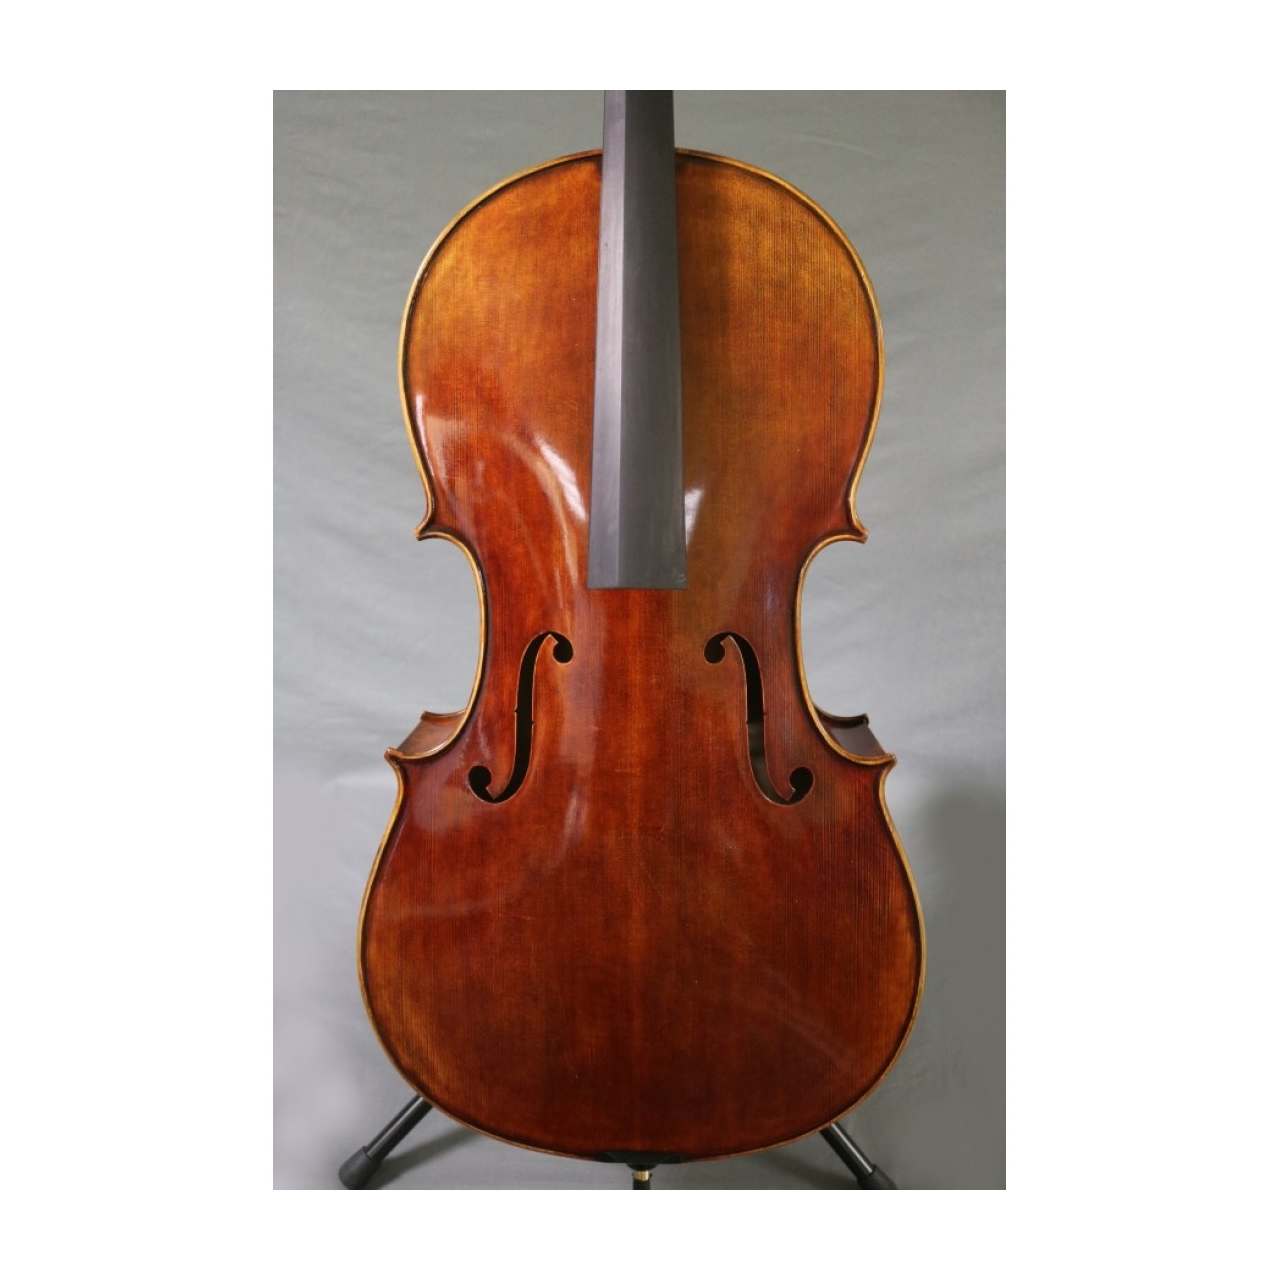 SE Cello 7/8 Fabrication artisanal D+